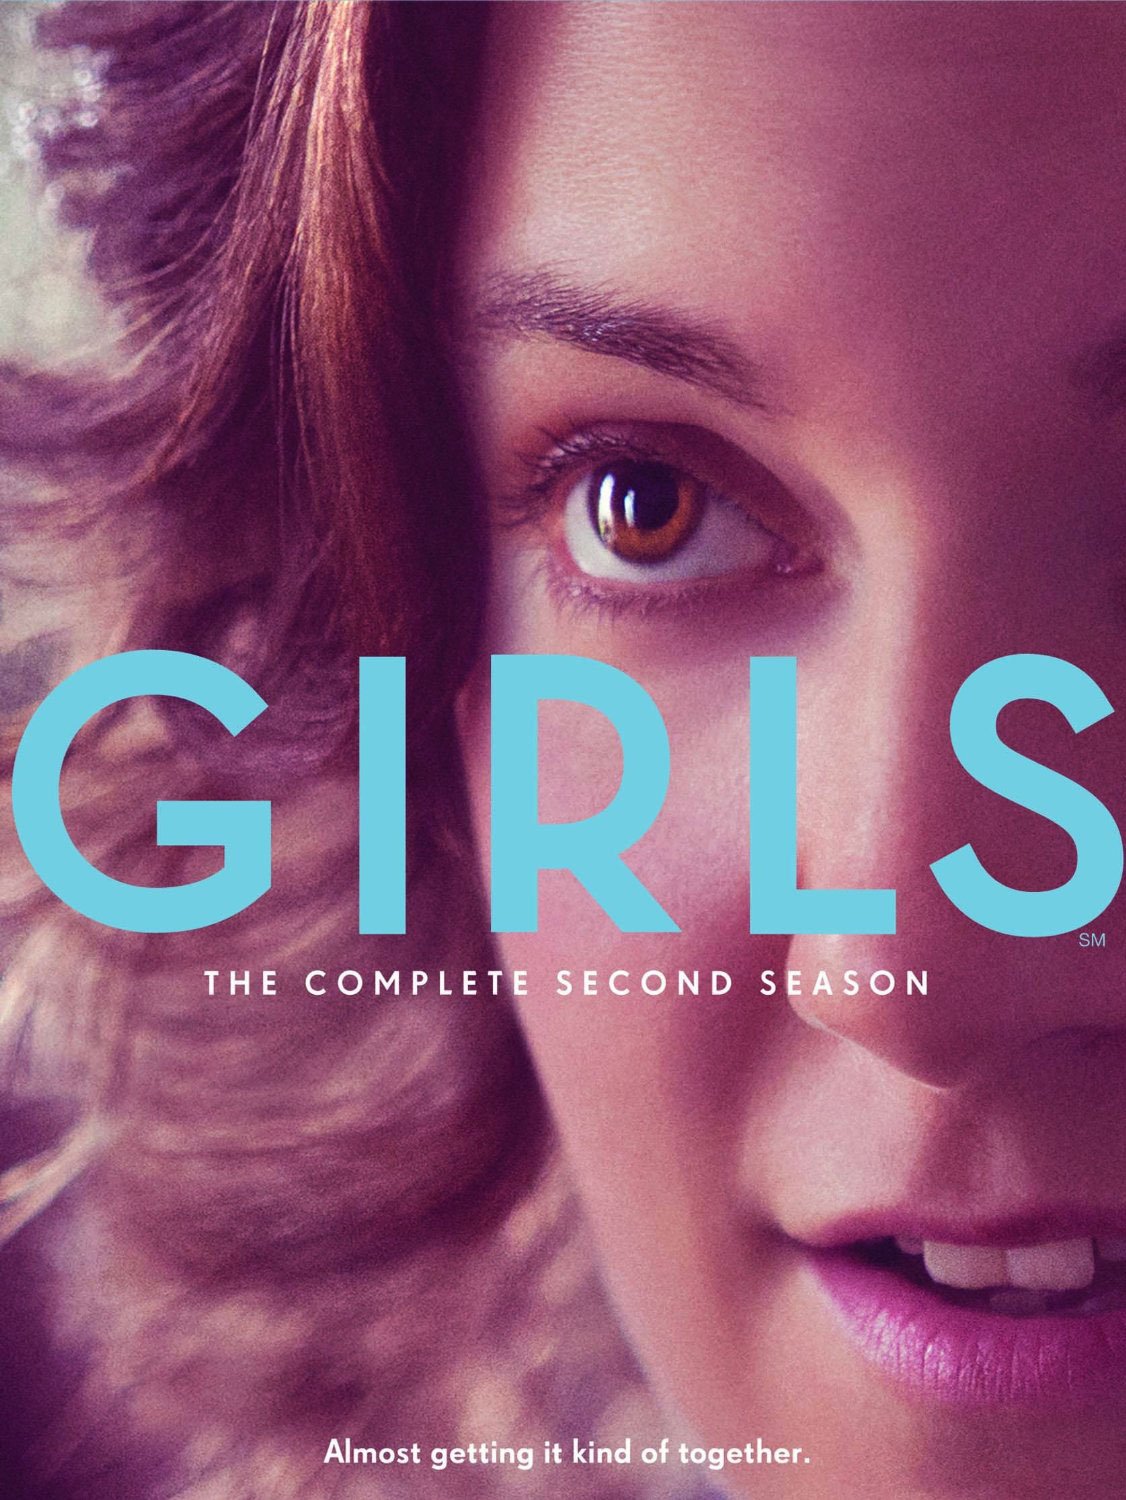 Gossip Girl: The Complete Series [DVD] [Region 1] [US Import] [NTSC]